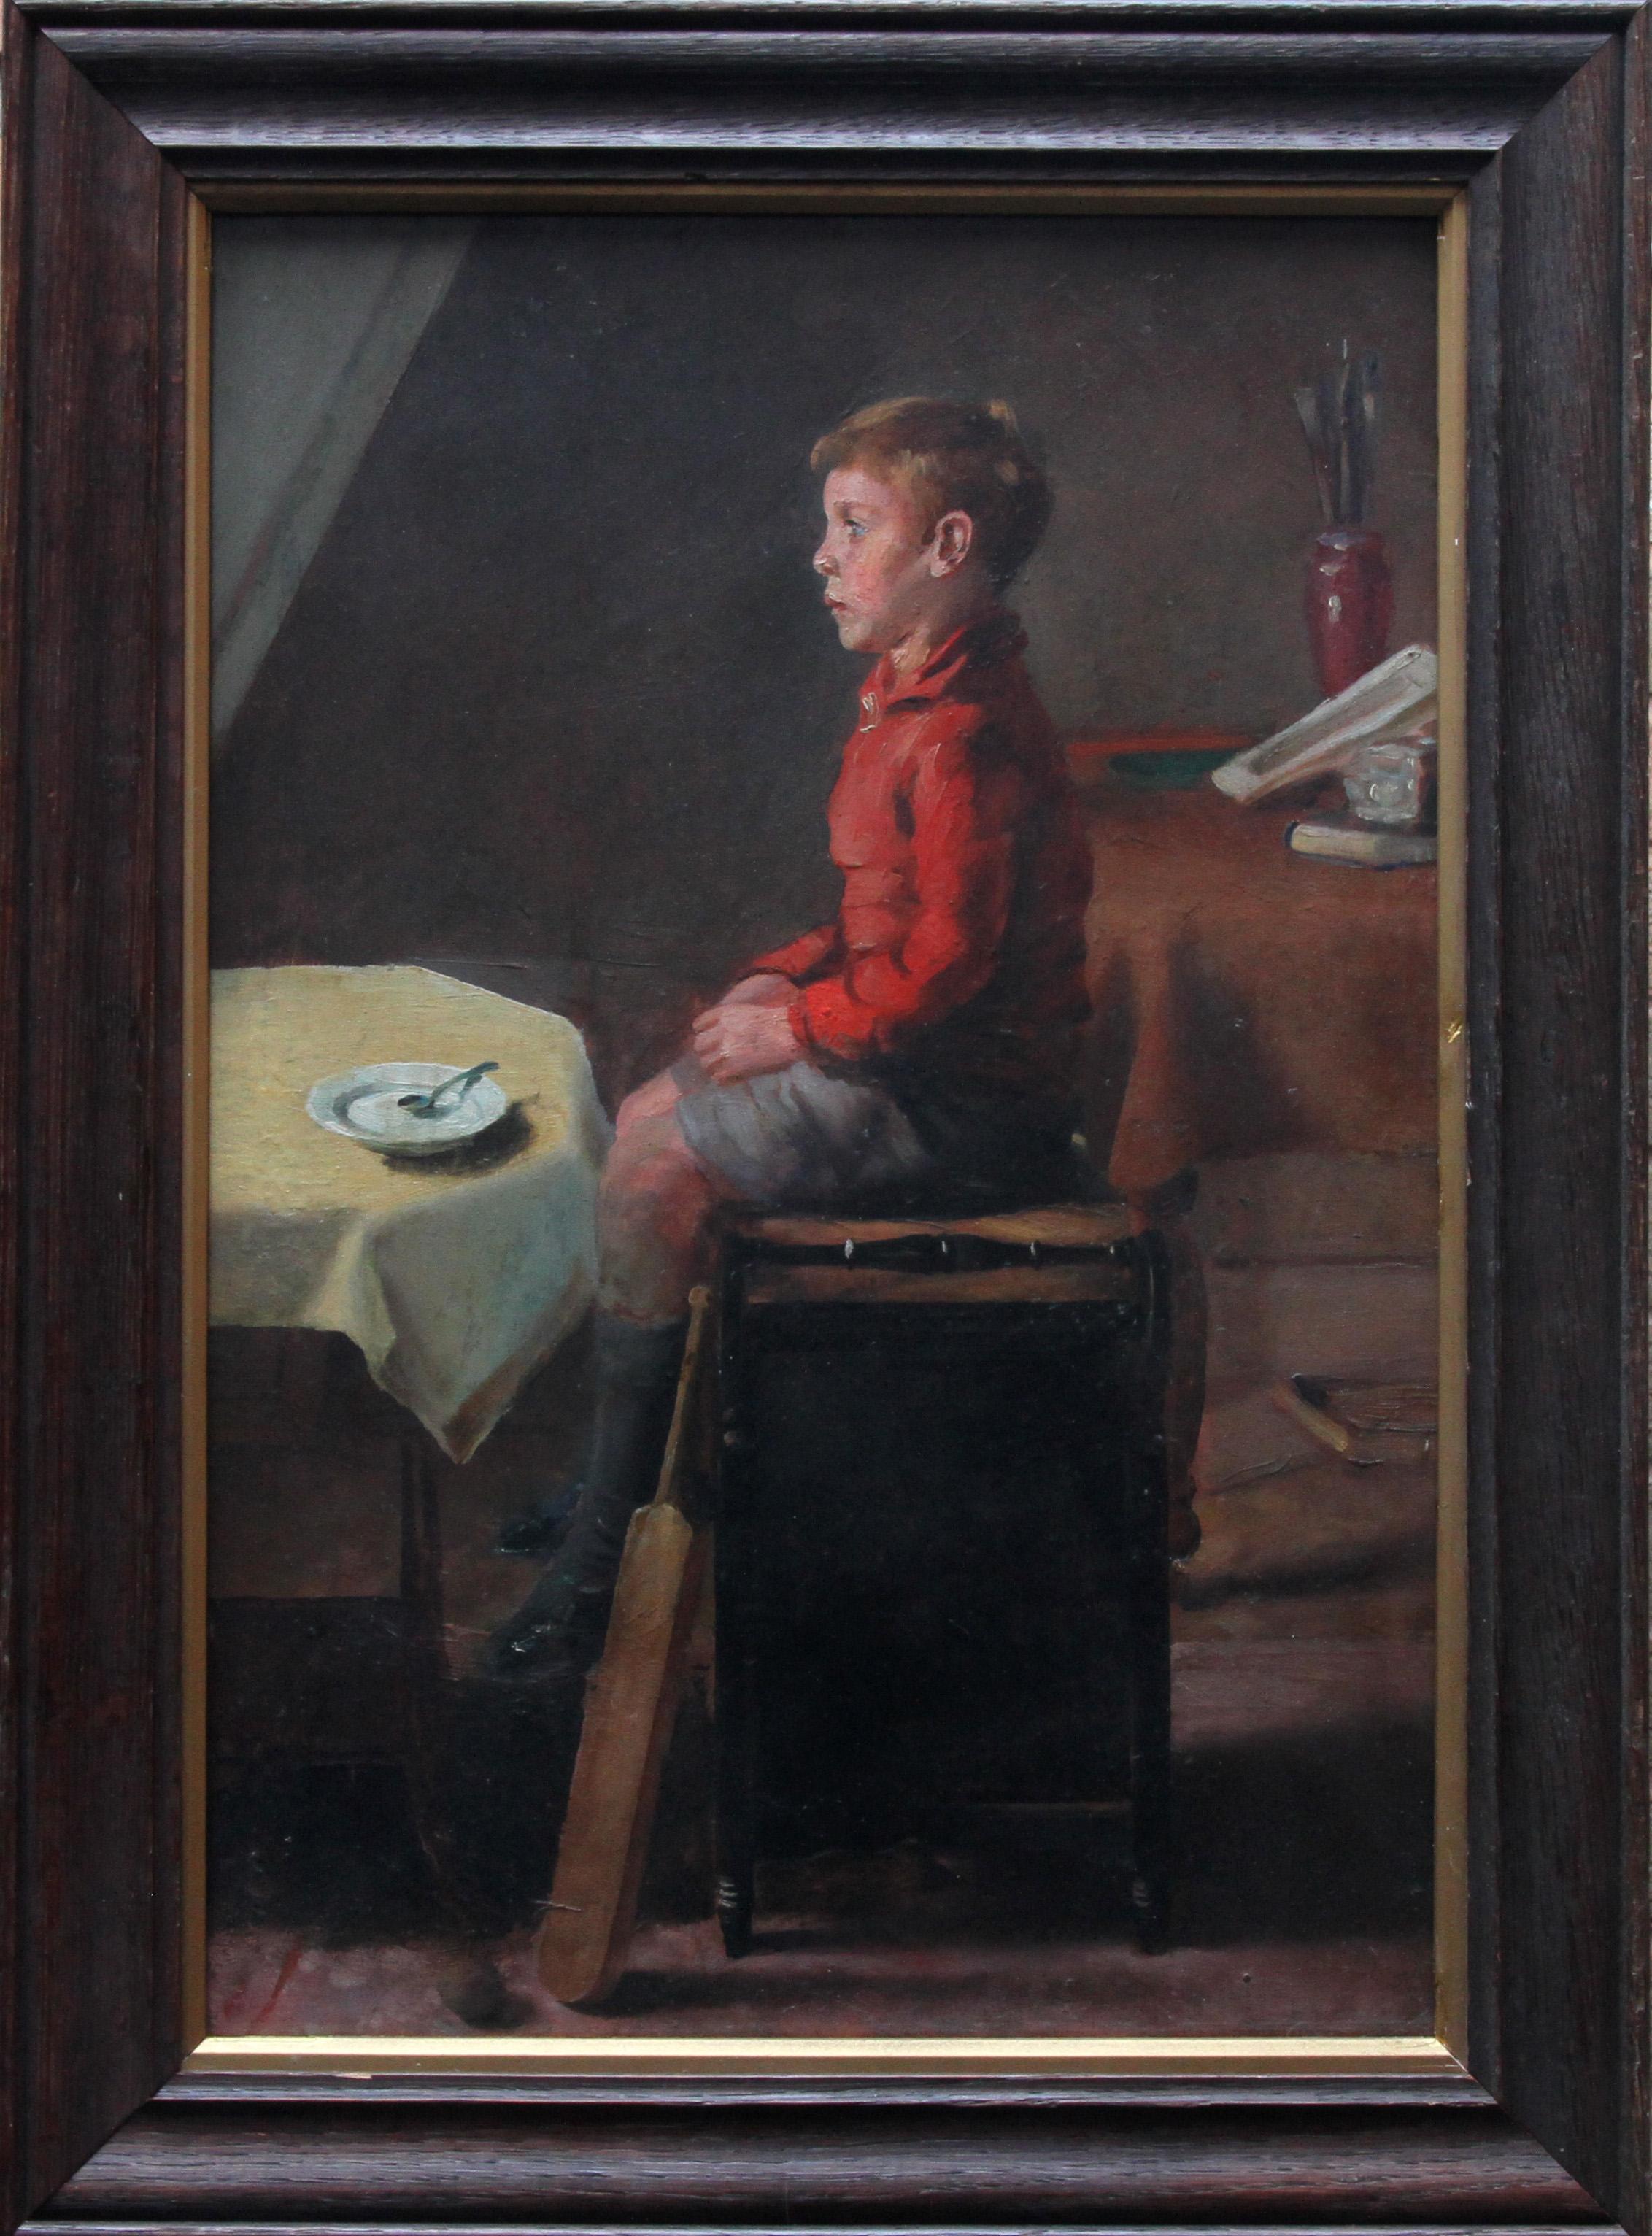 Schoolboy with Cricket Bat - British Slade School art 30's portrait oil painting 4